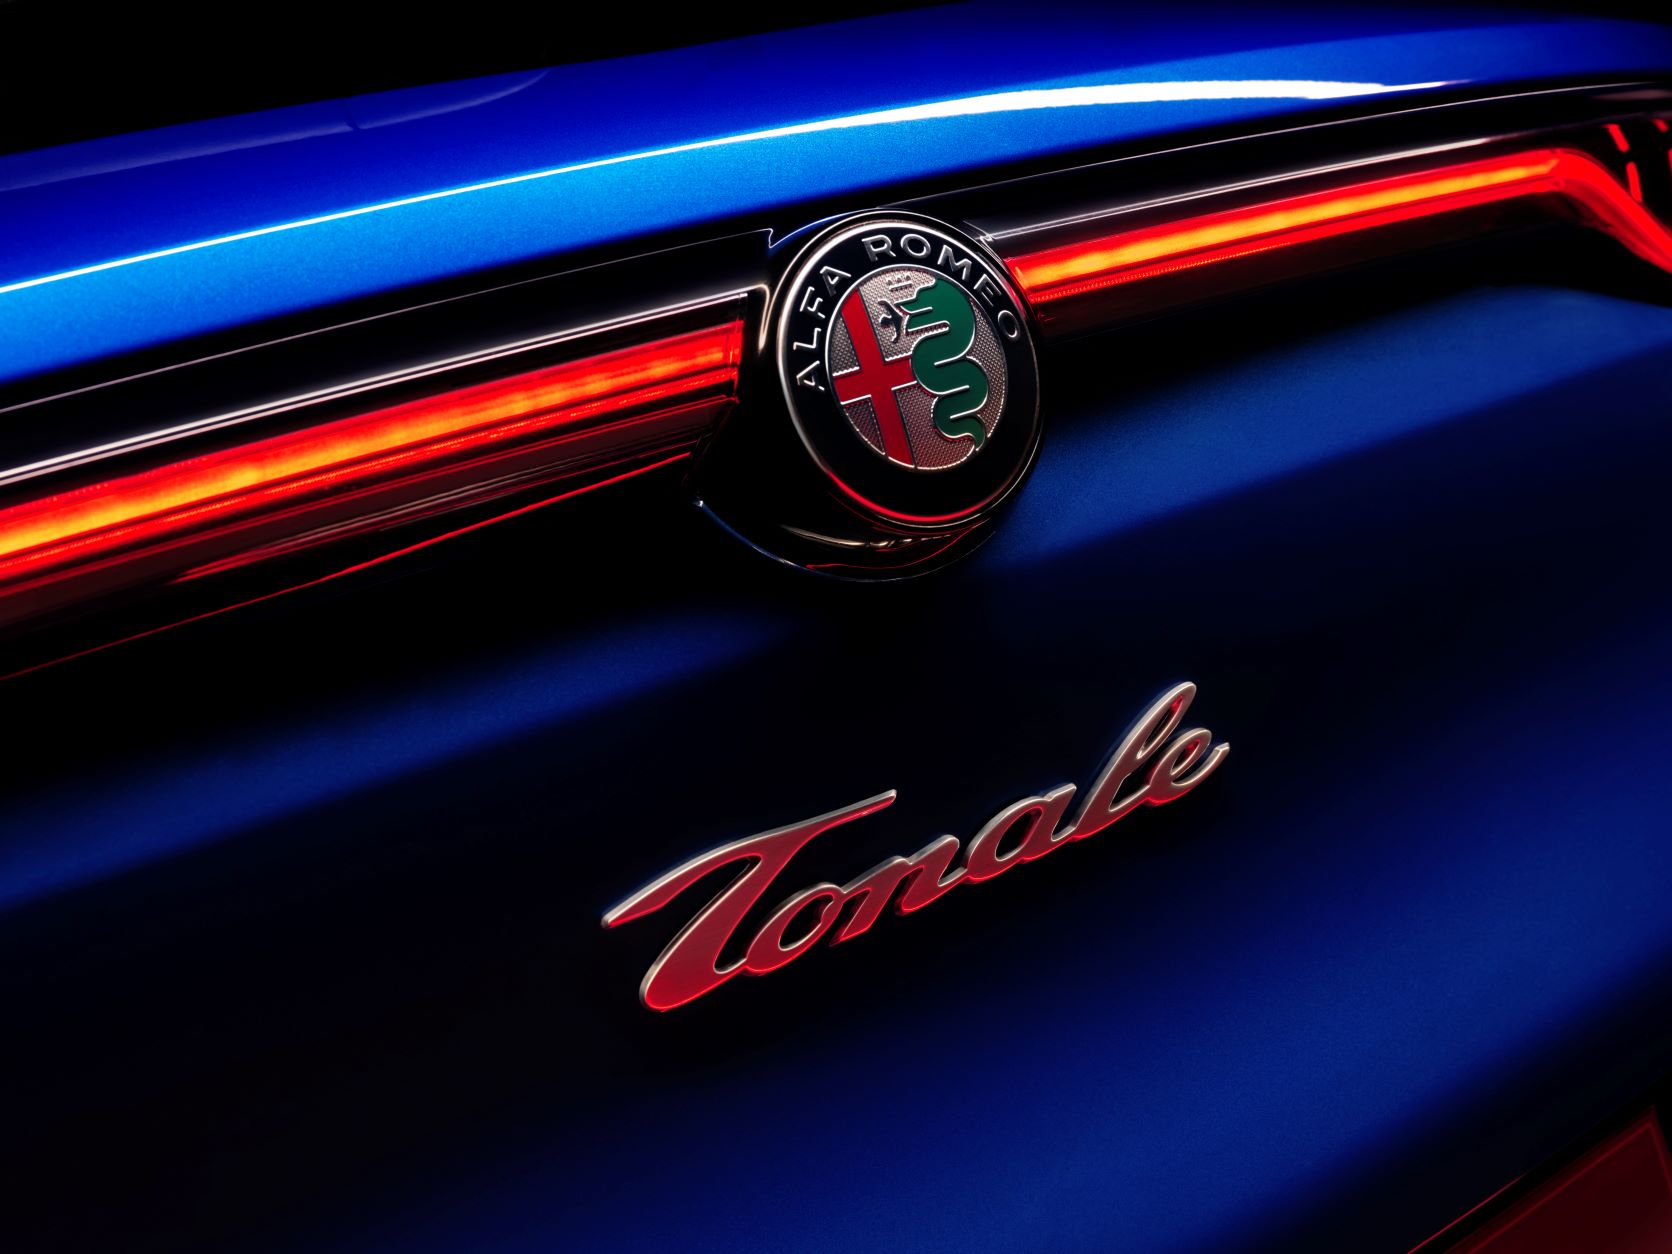 Tonale badge on the new Alfa Romeo Tonale